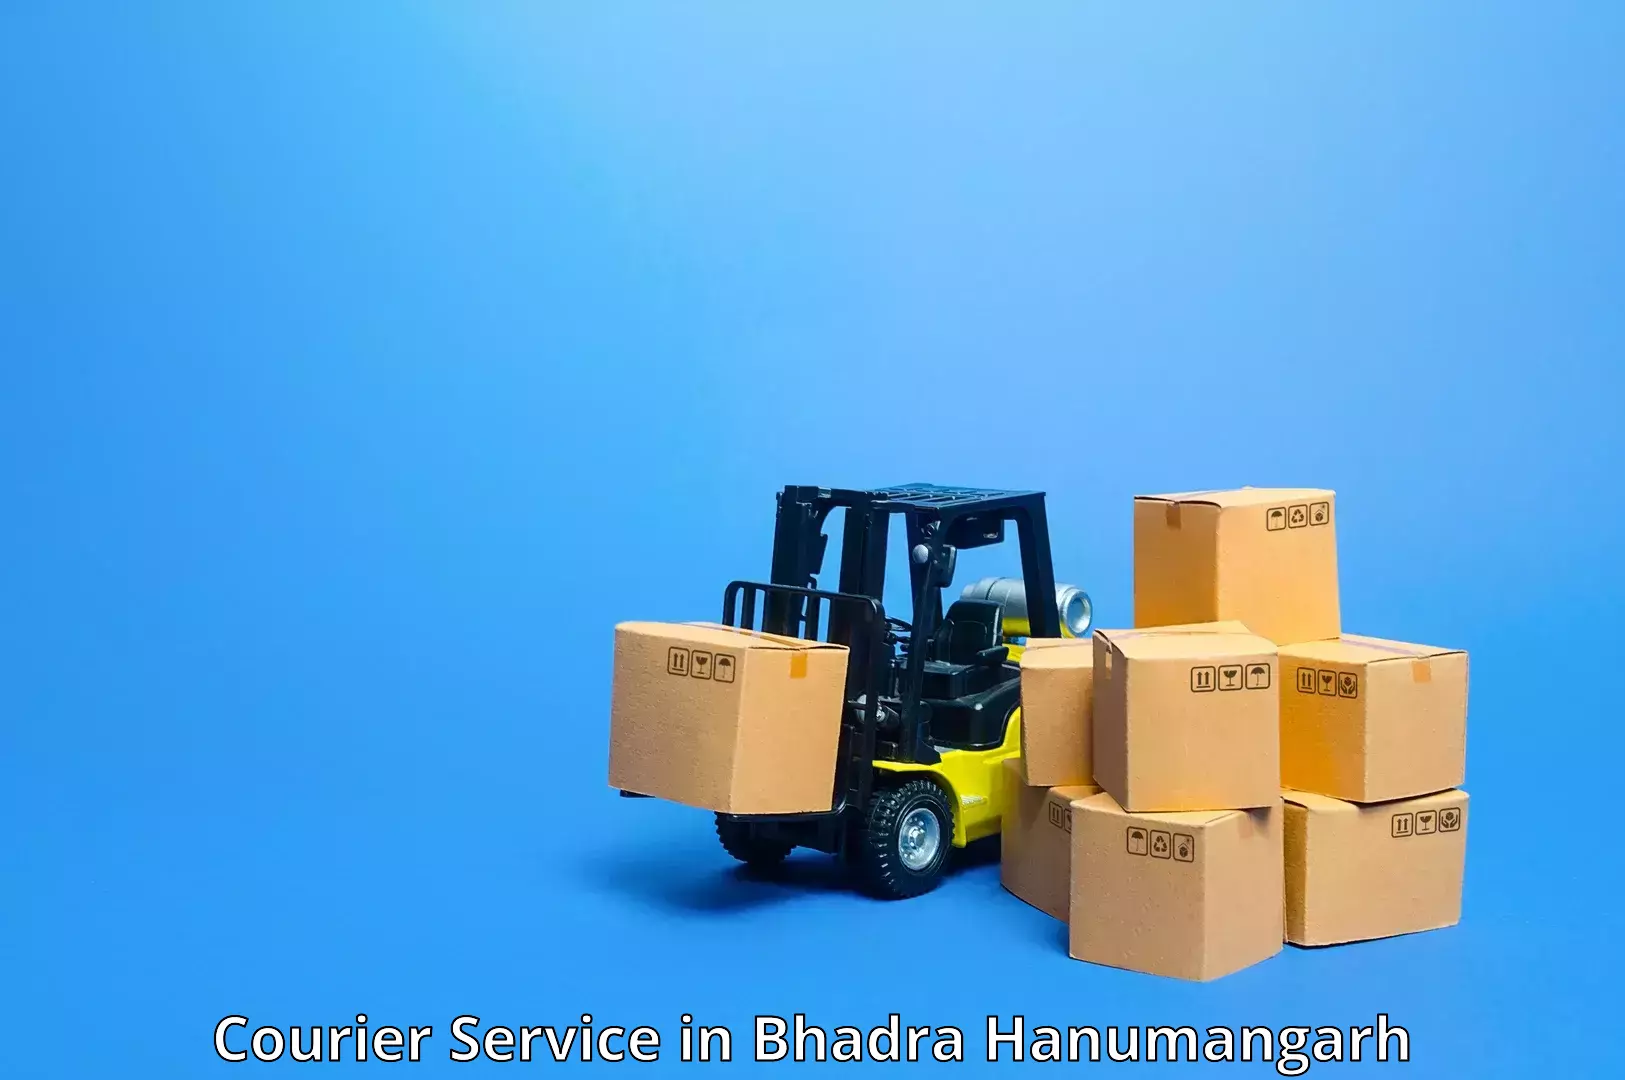 Emergency parcel delivery in Bhadra Hanumangarh